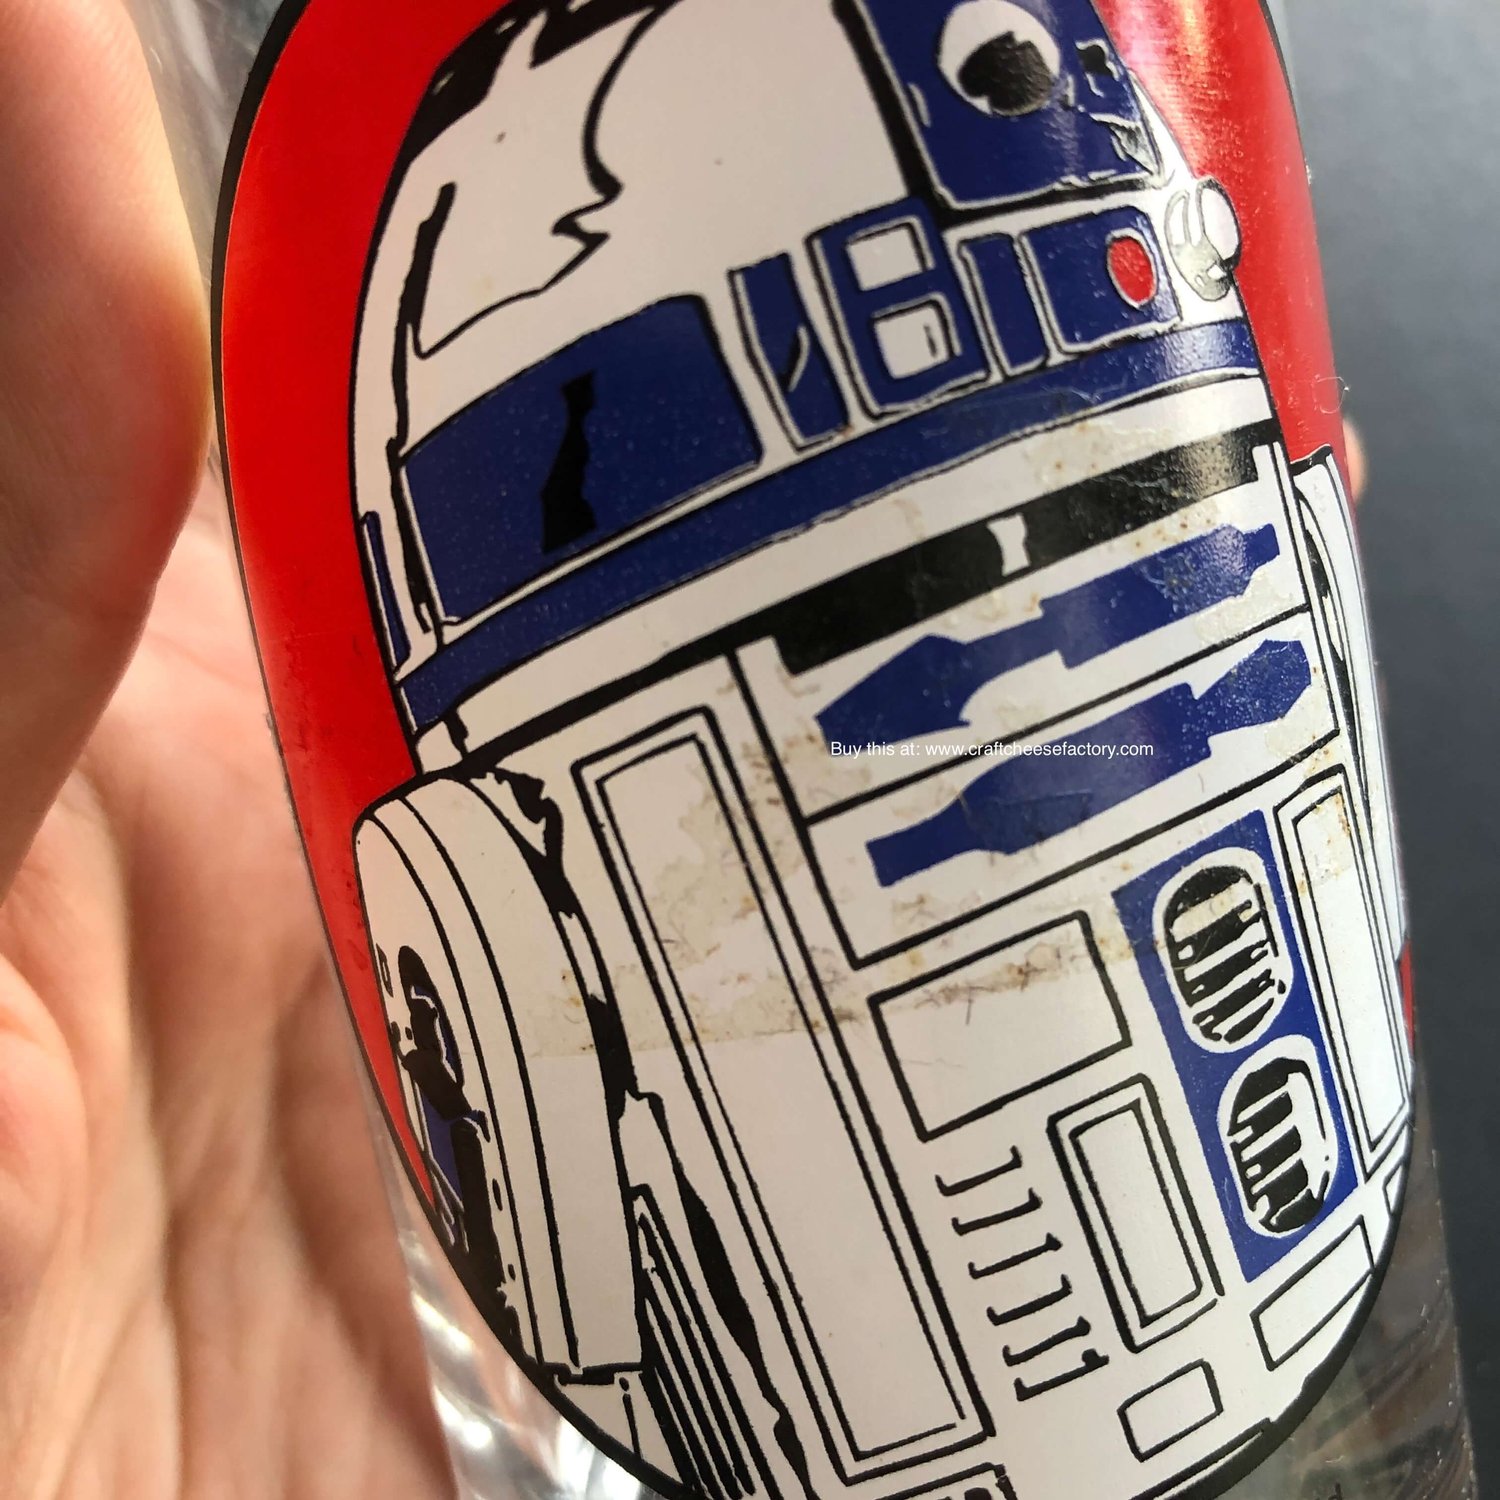 Vintage Star Wars Pepsi R2D2 drinking glass —